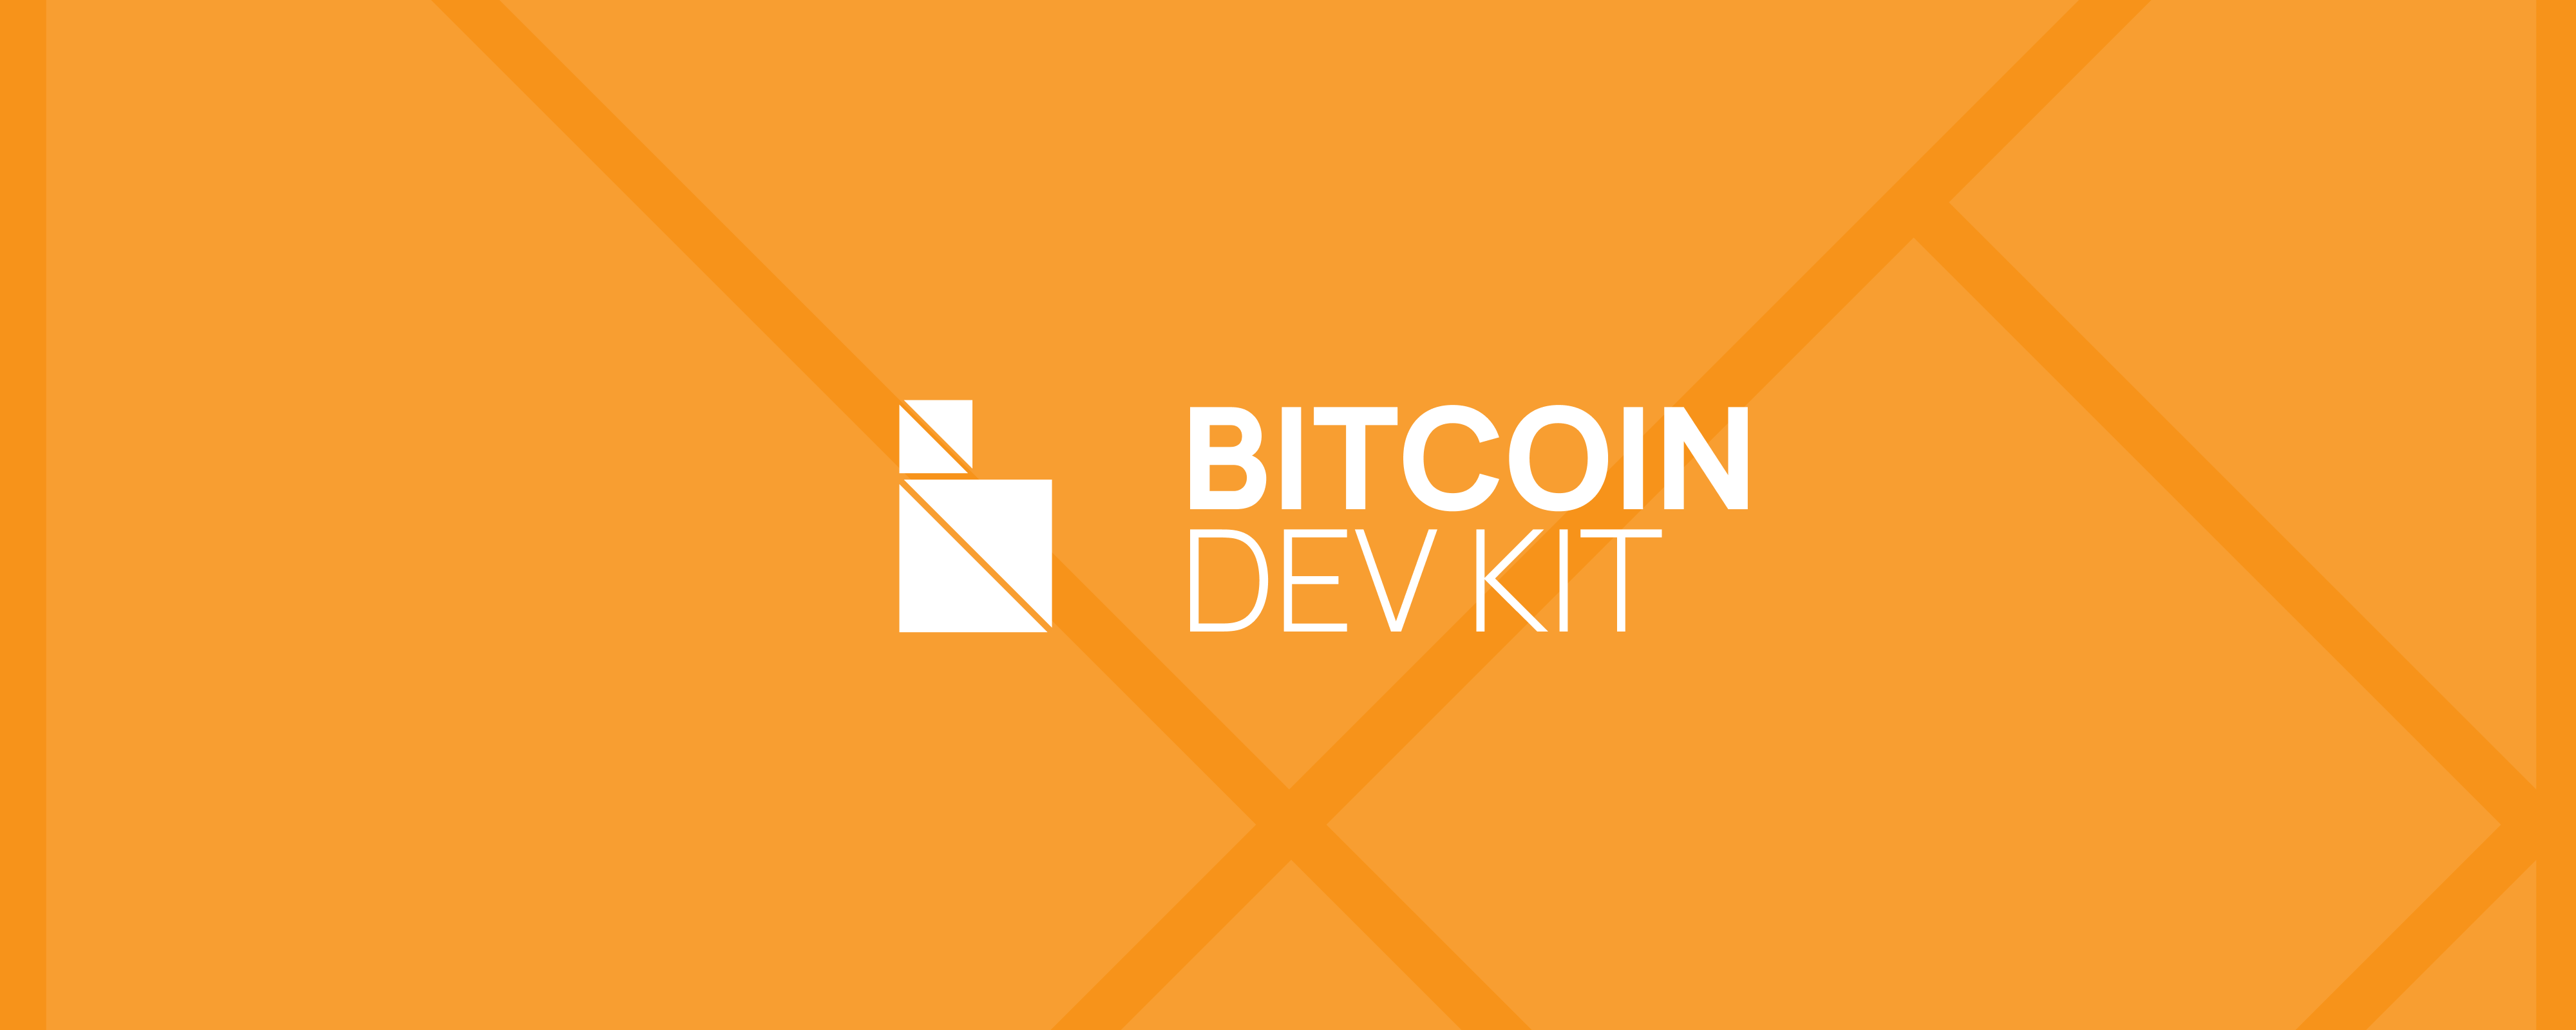 An image of the bitcoin development kit logo